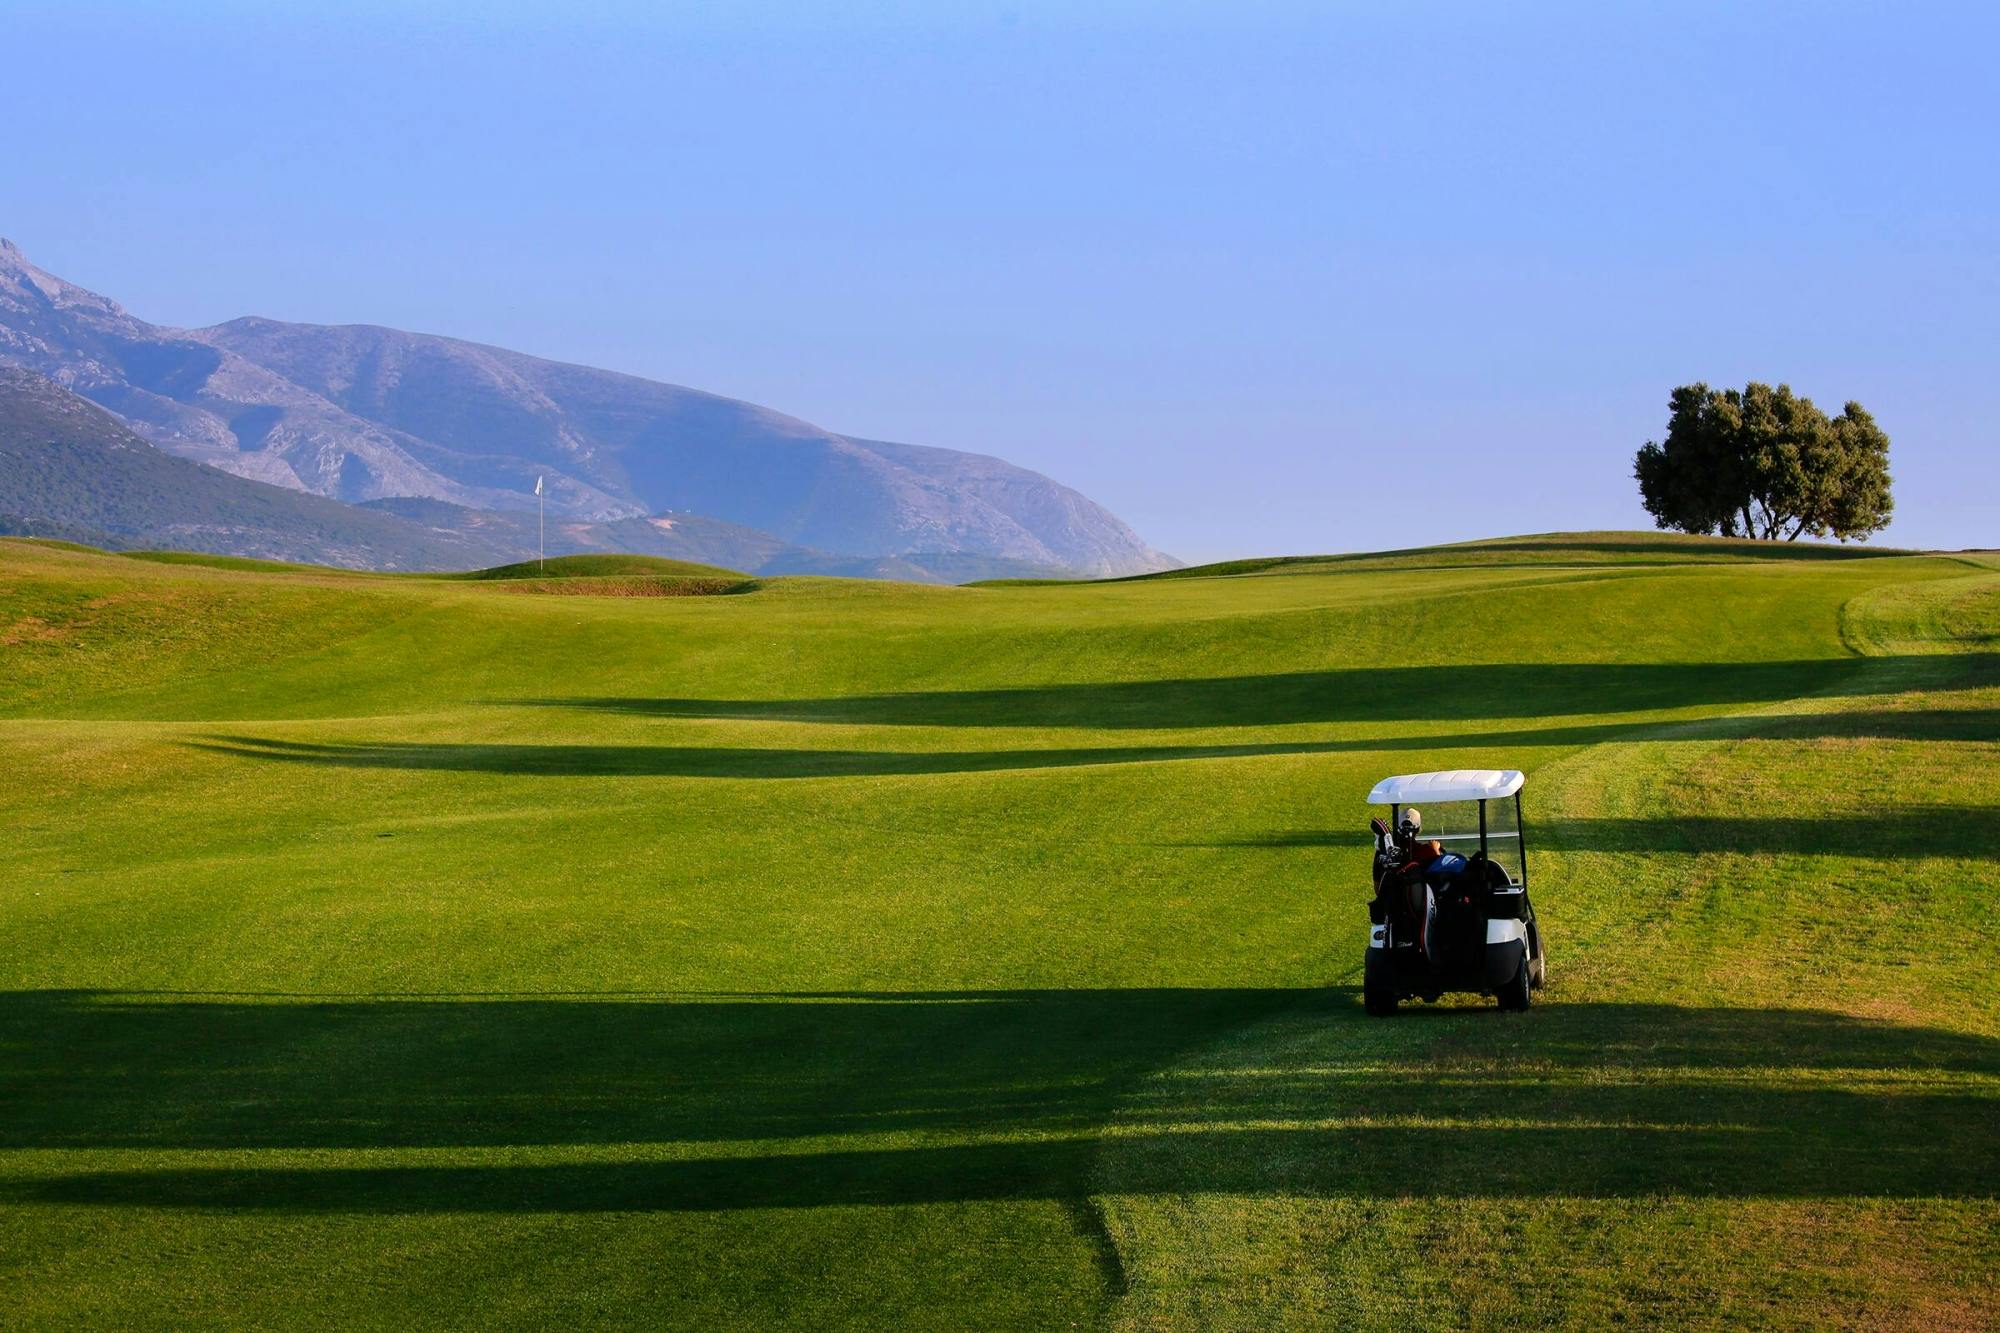 Crete Golf Club